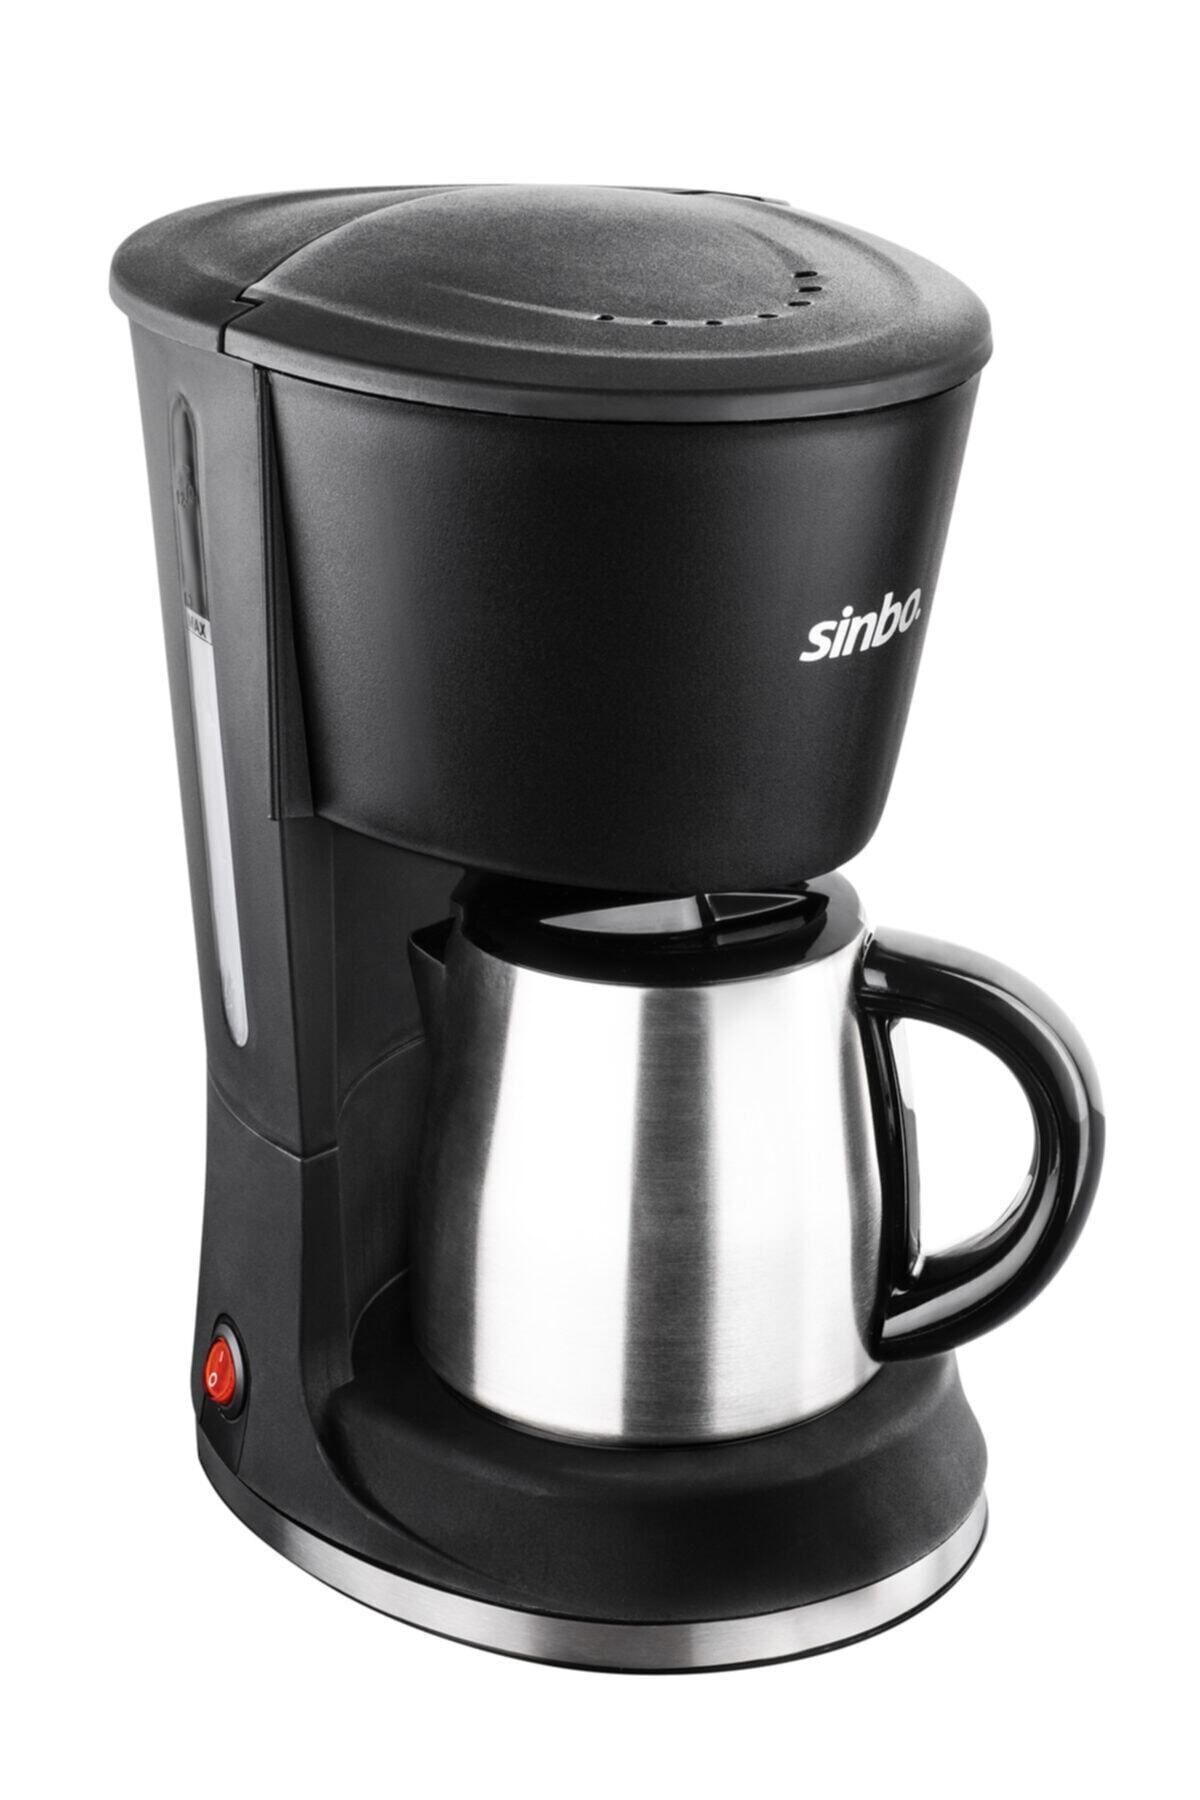 Sinbo Scm-2963 Filtre Kahve Makinesi